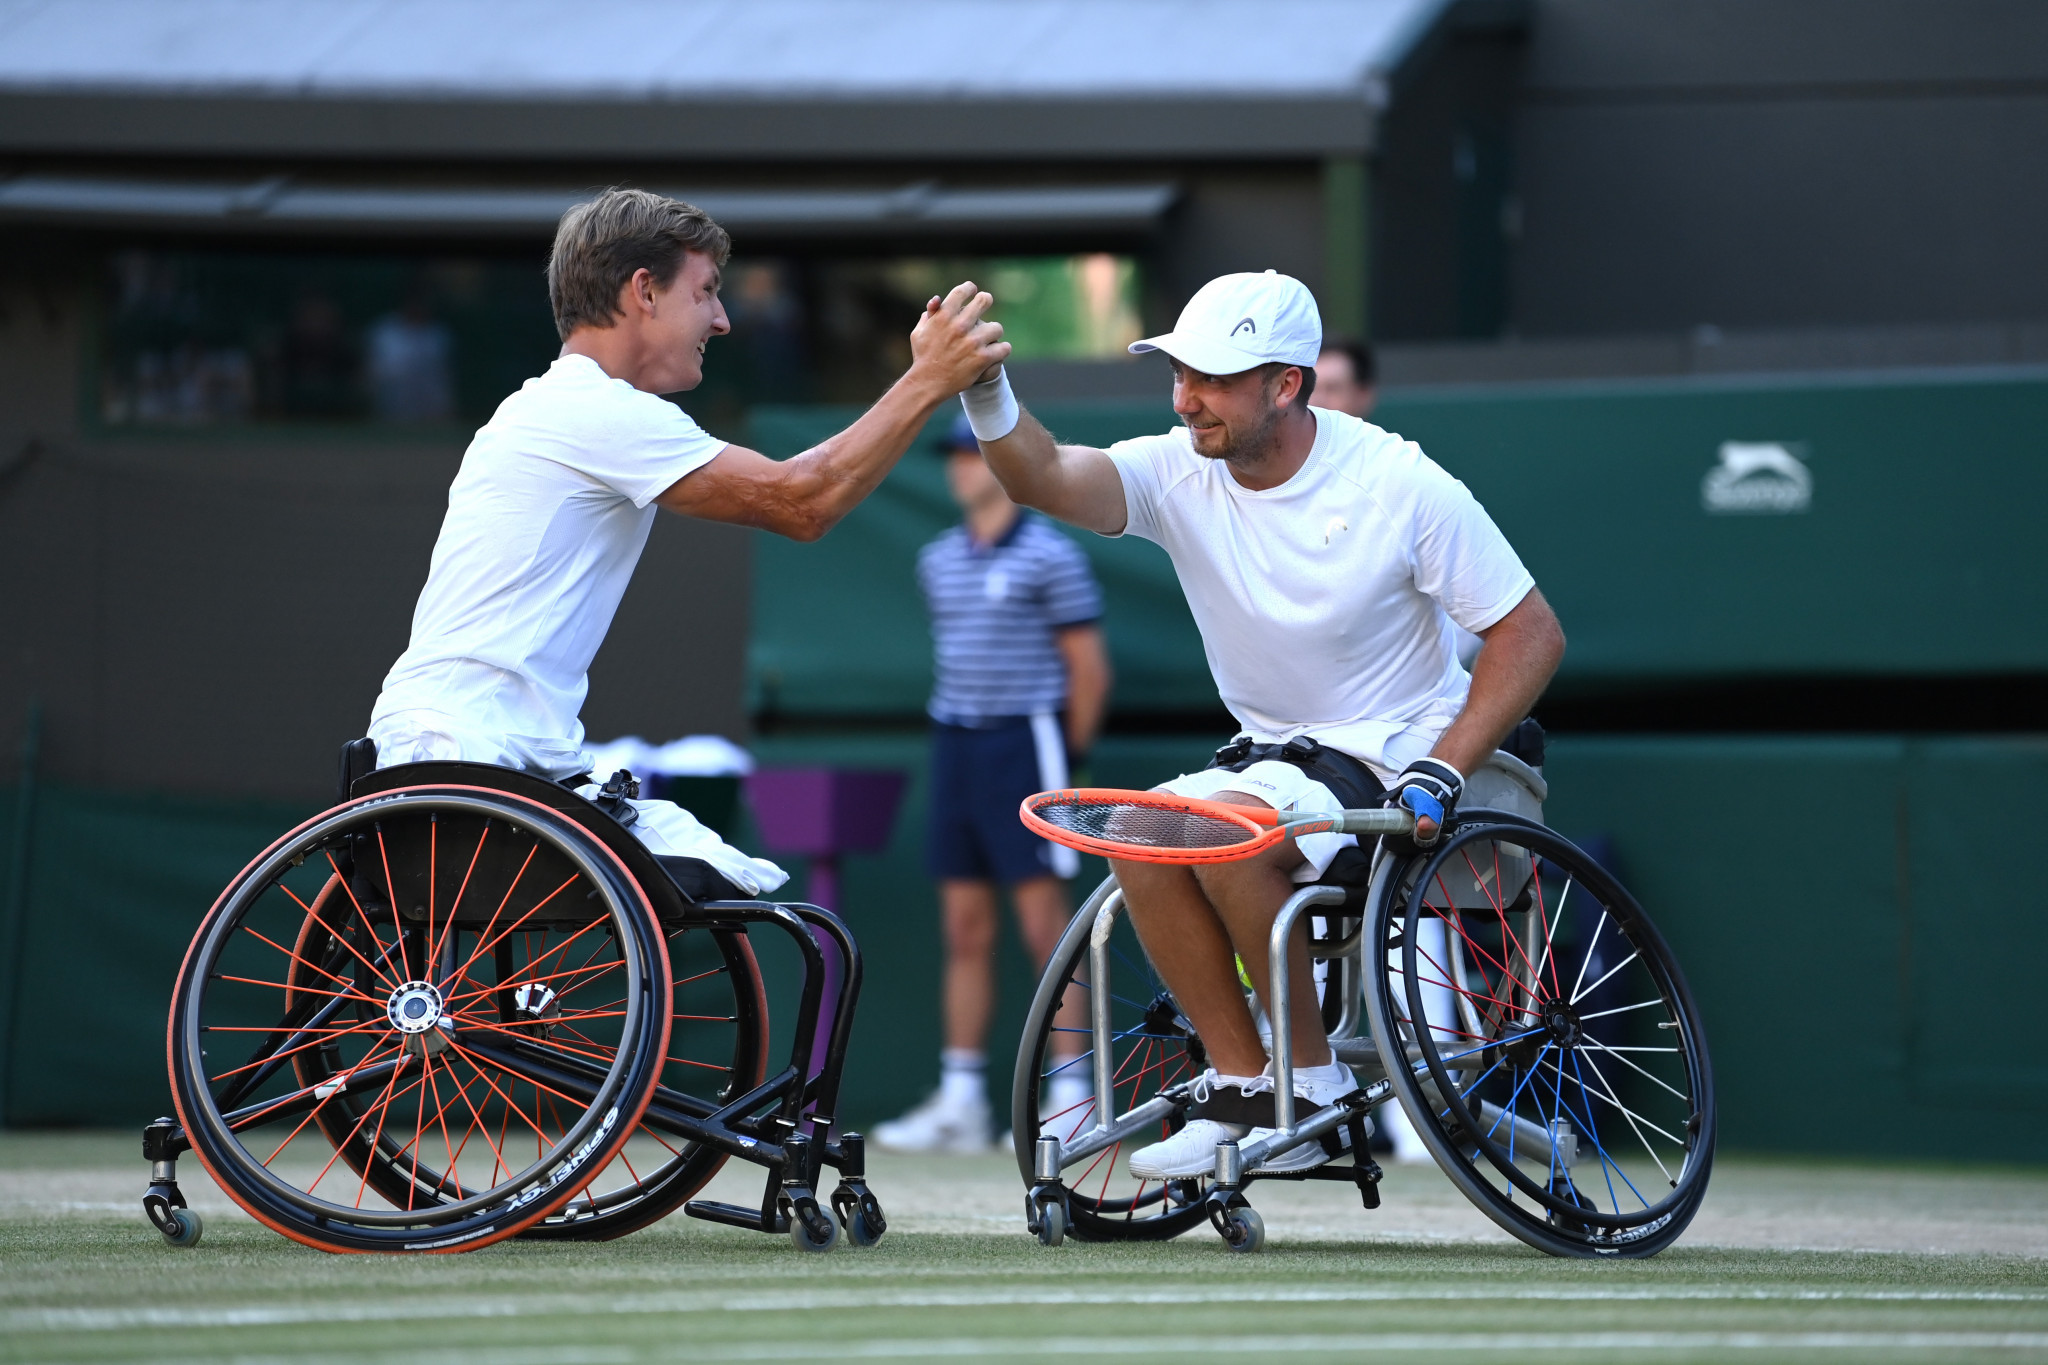 Dutch pair Vink and Schröder to meet in quad singles final at Australian Open